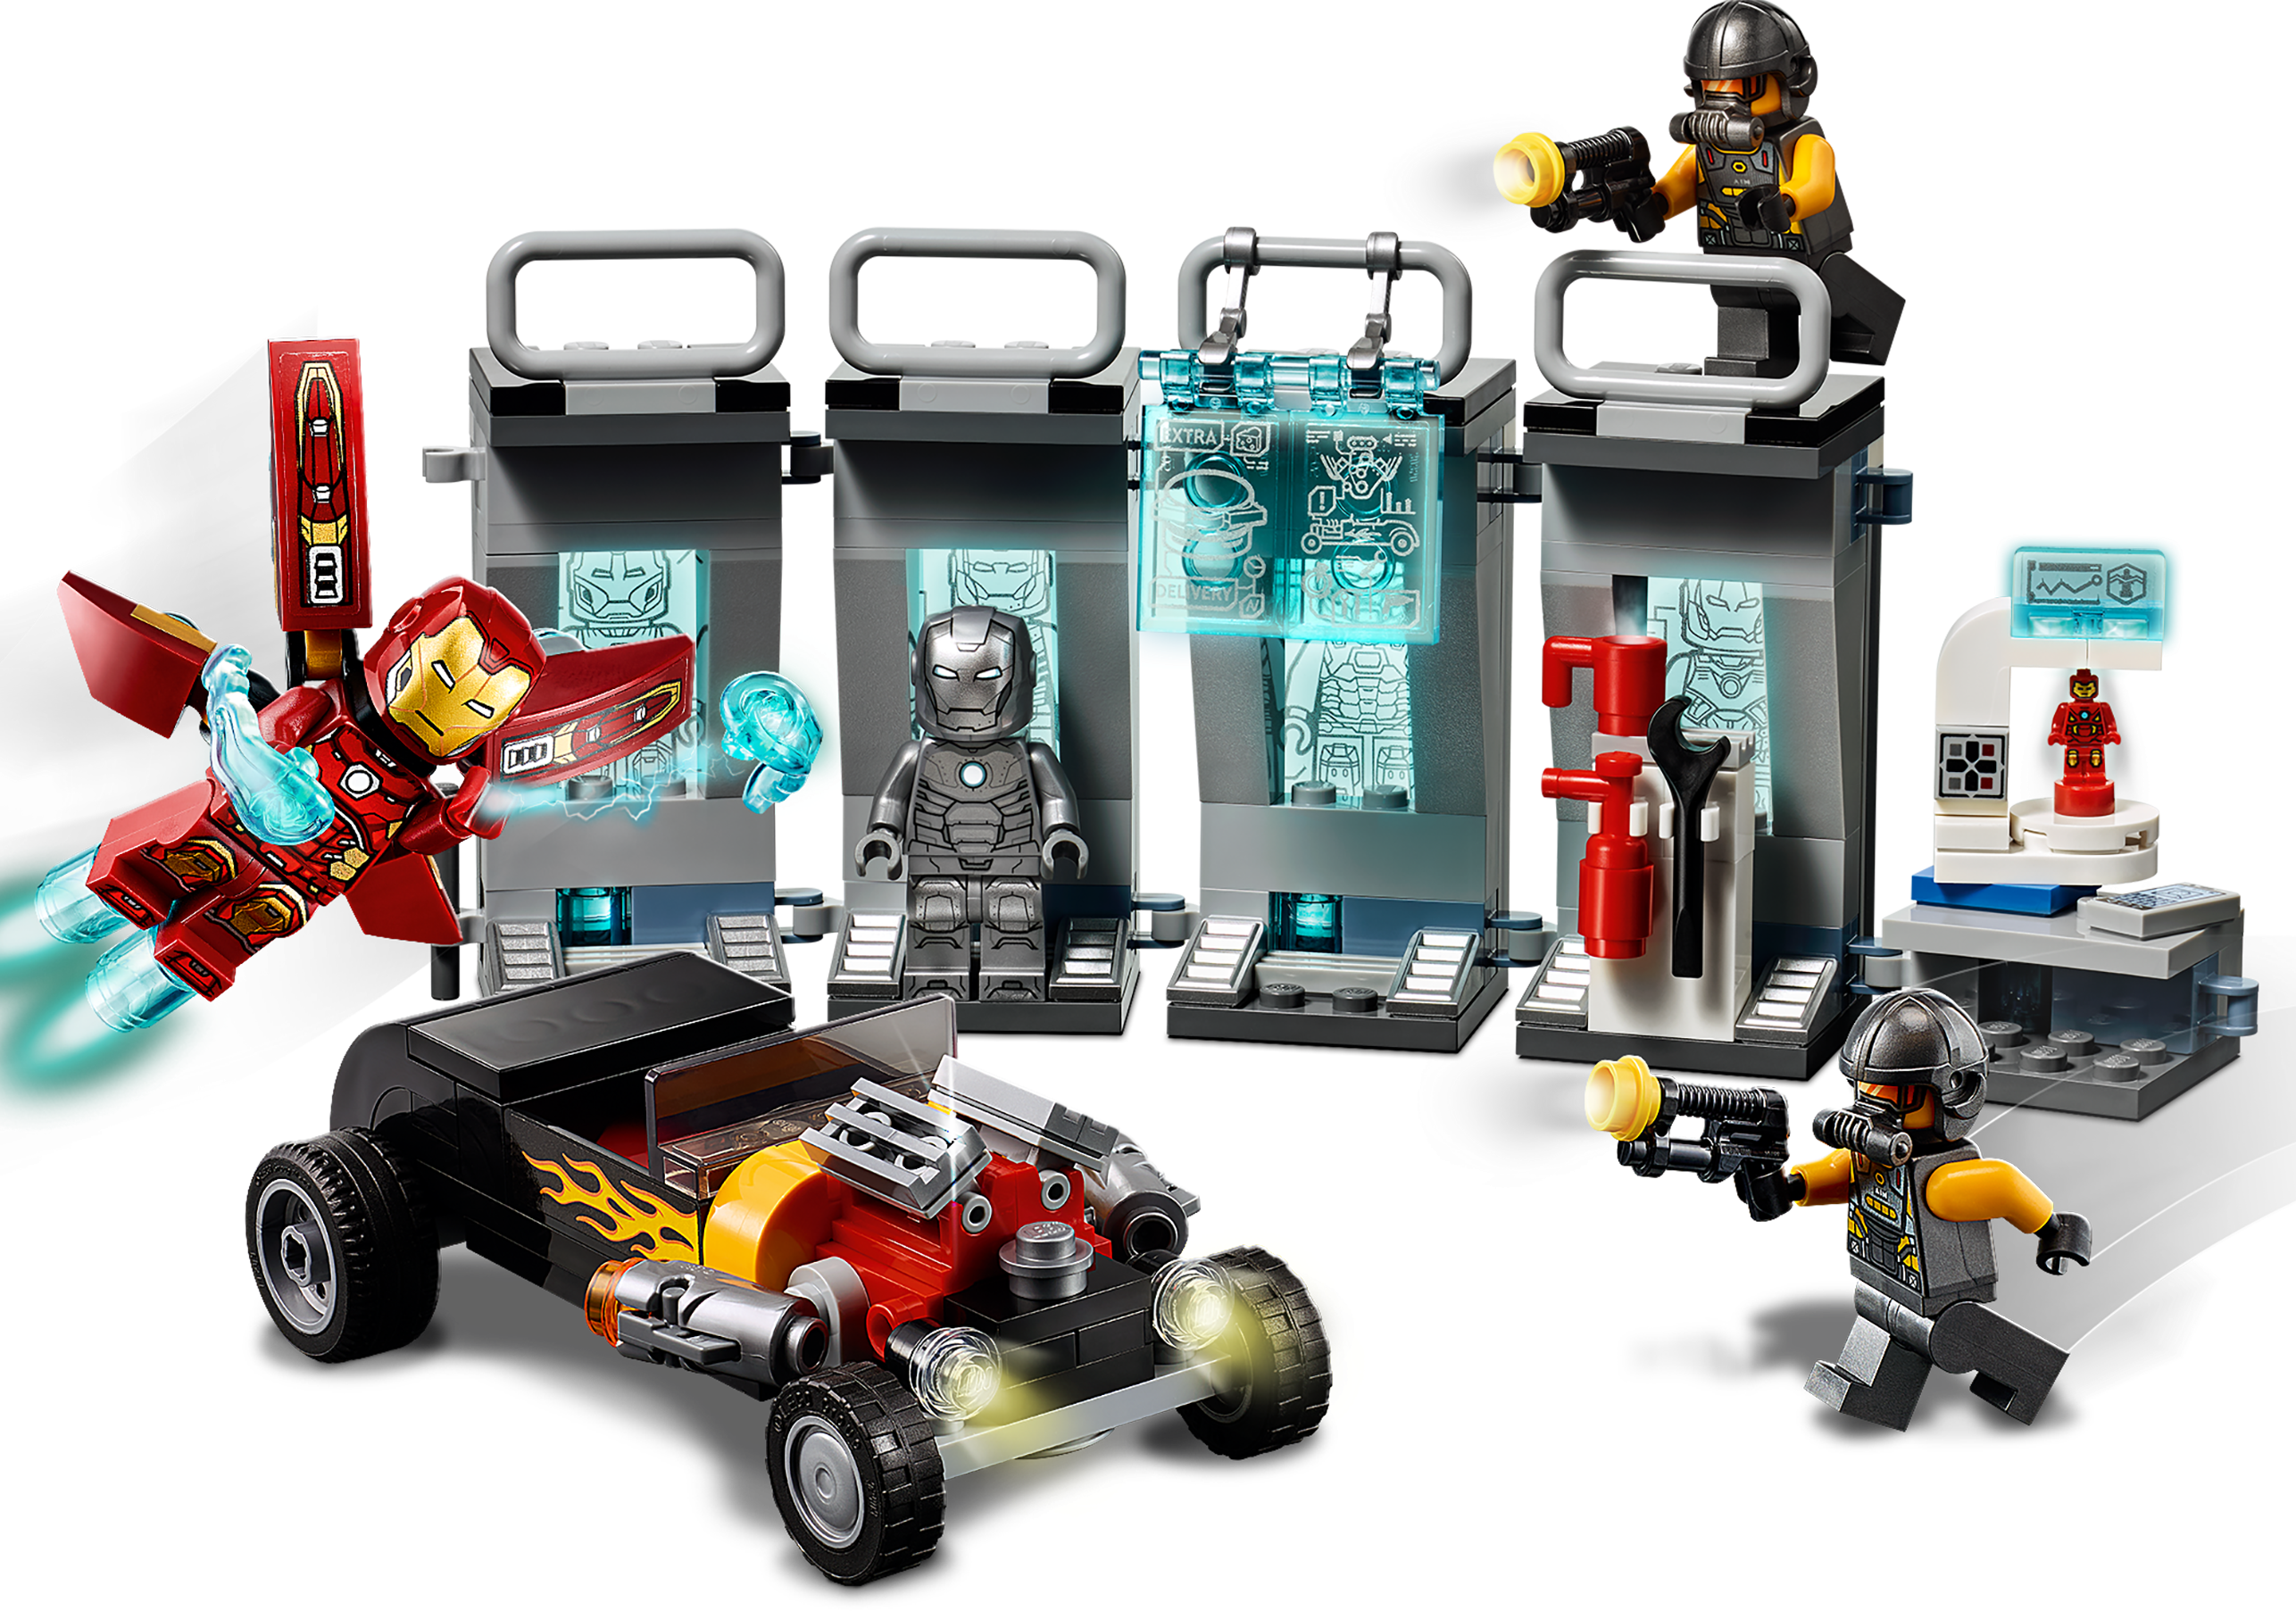 Tony Stark LEGO Minifigure Marvel NEW 76167